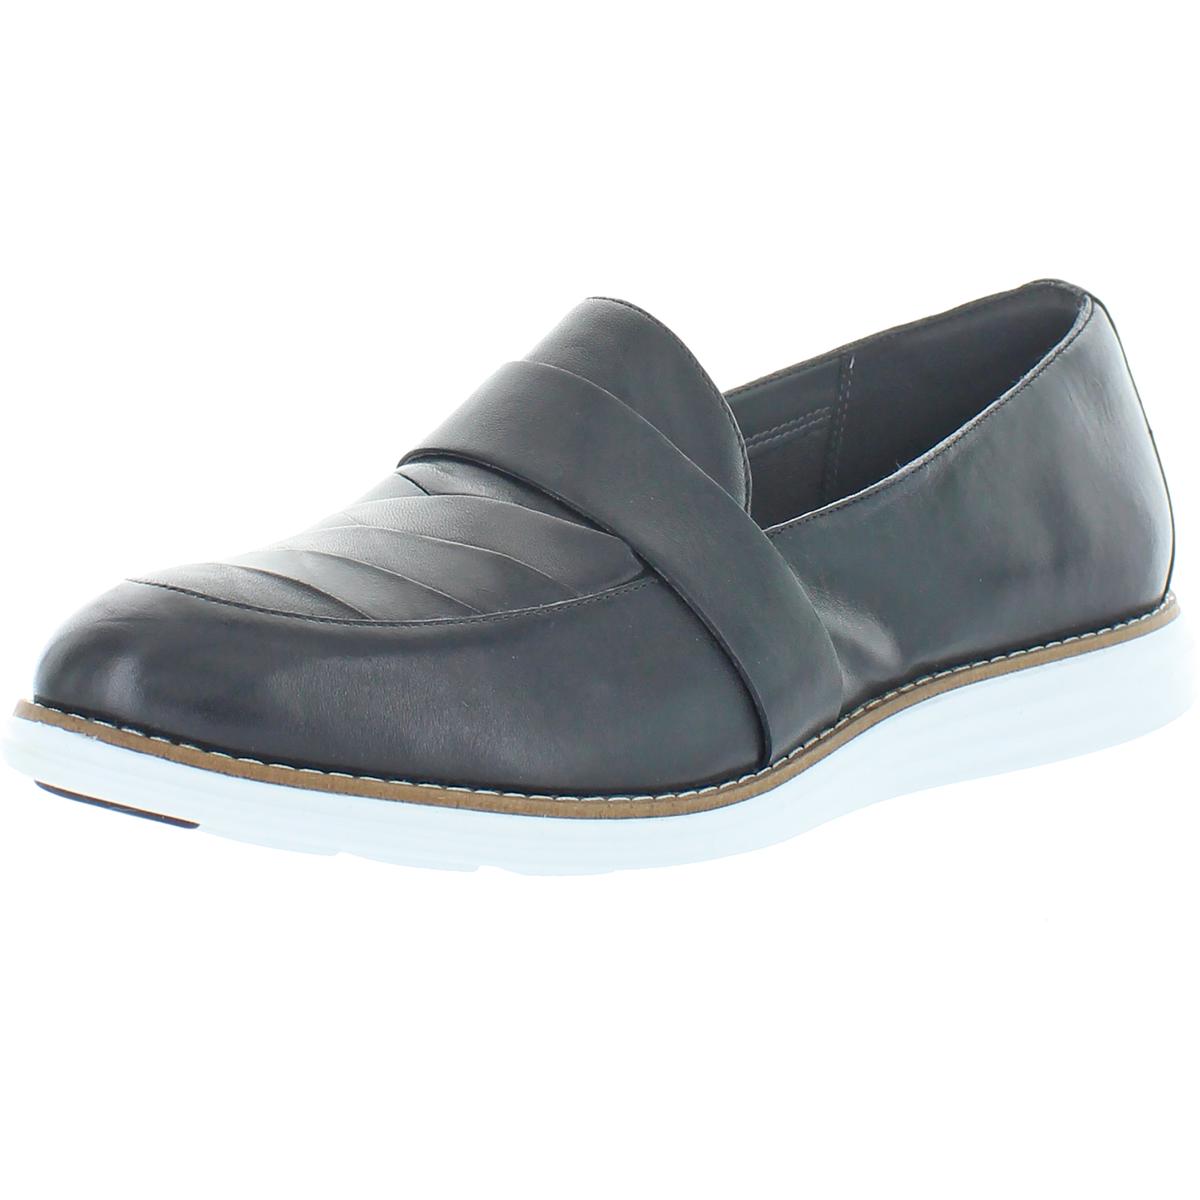 Cole Haan Womens Original Grand Black Flats Shoes 7.5 Medium (B,M) BHFO ...